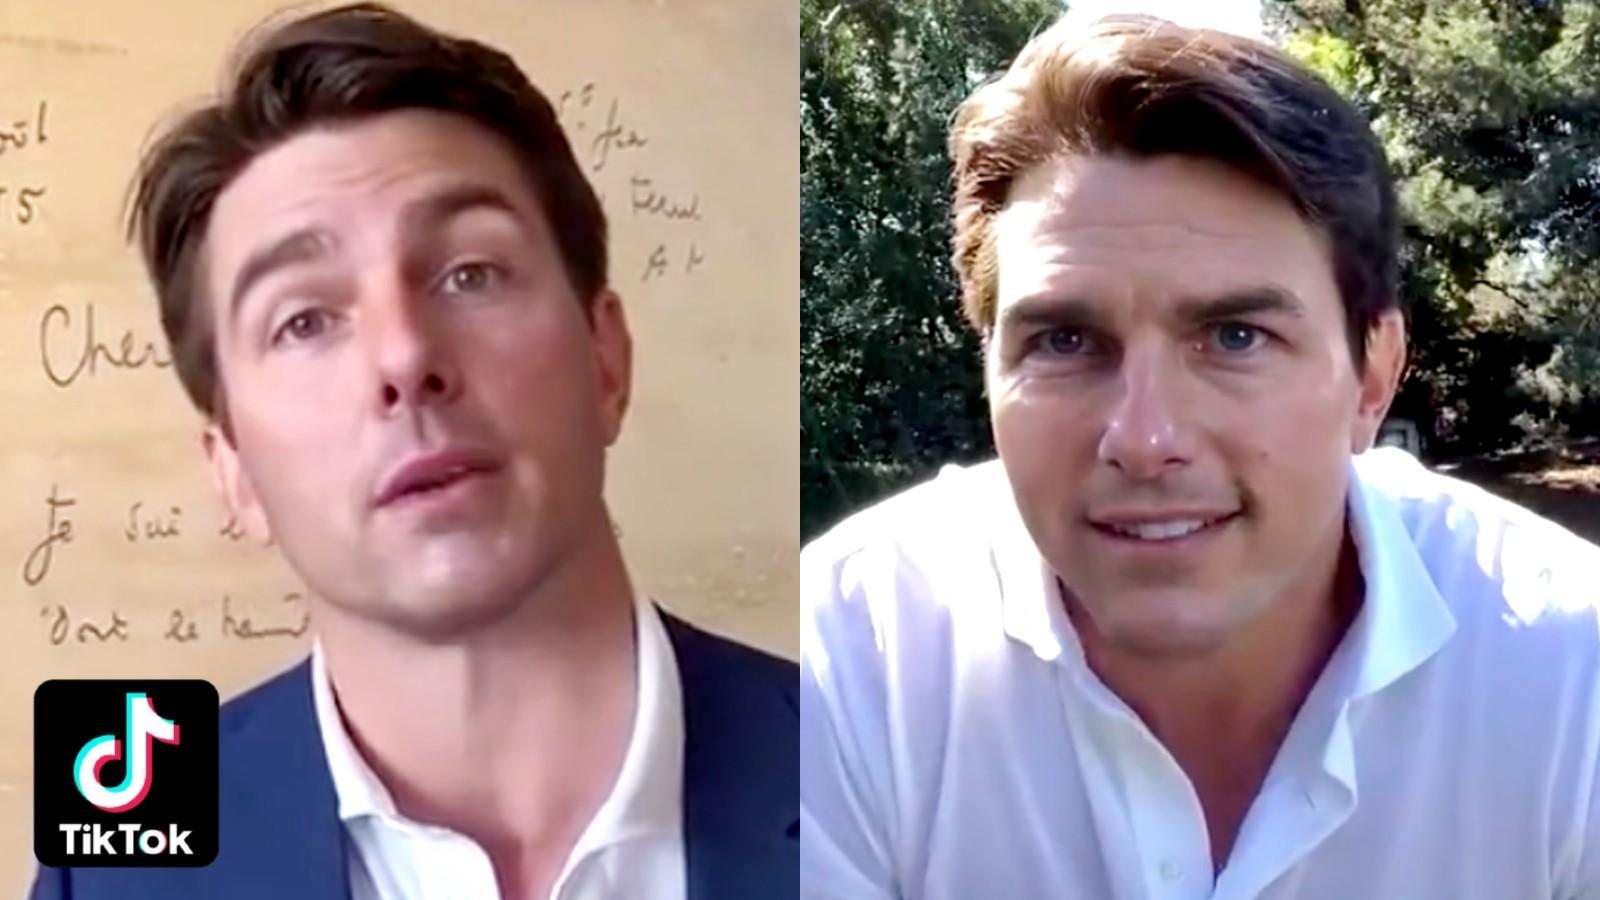 Viral Tom Cruise deepfake screenshots side by side